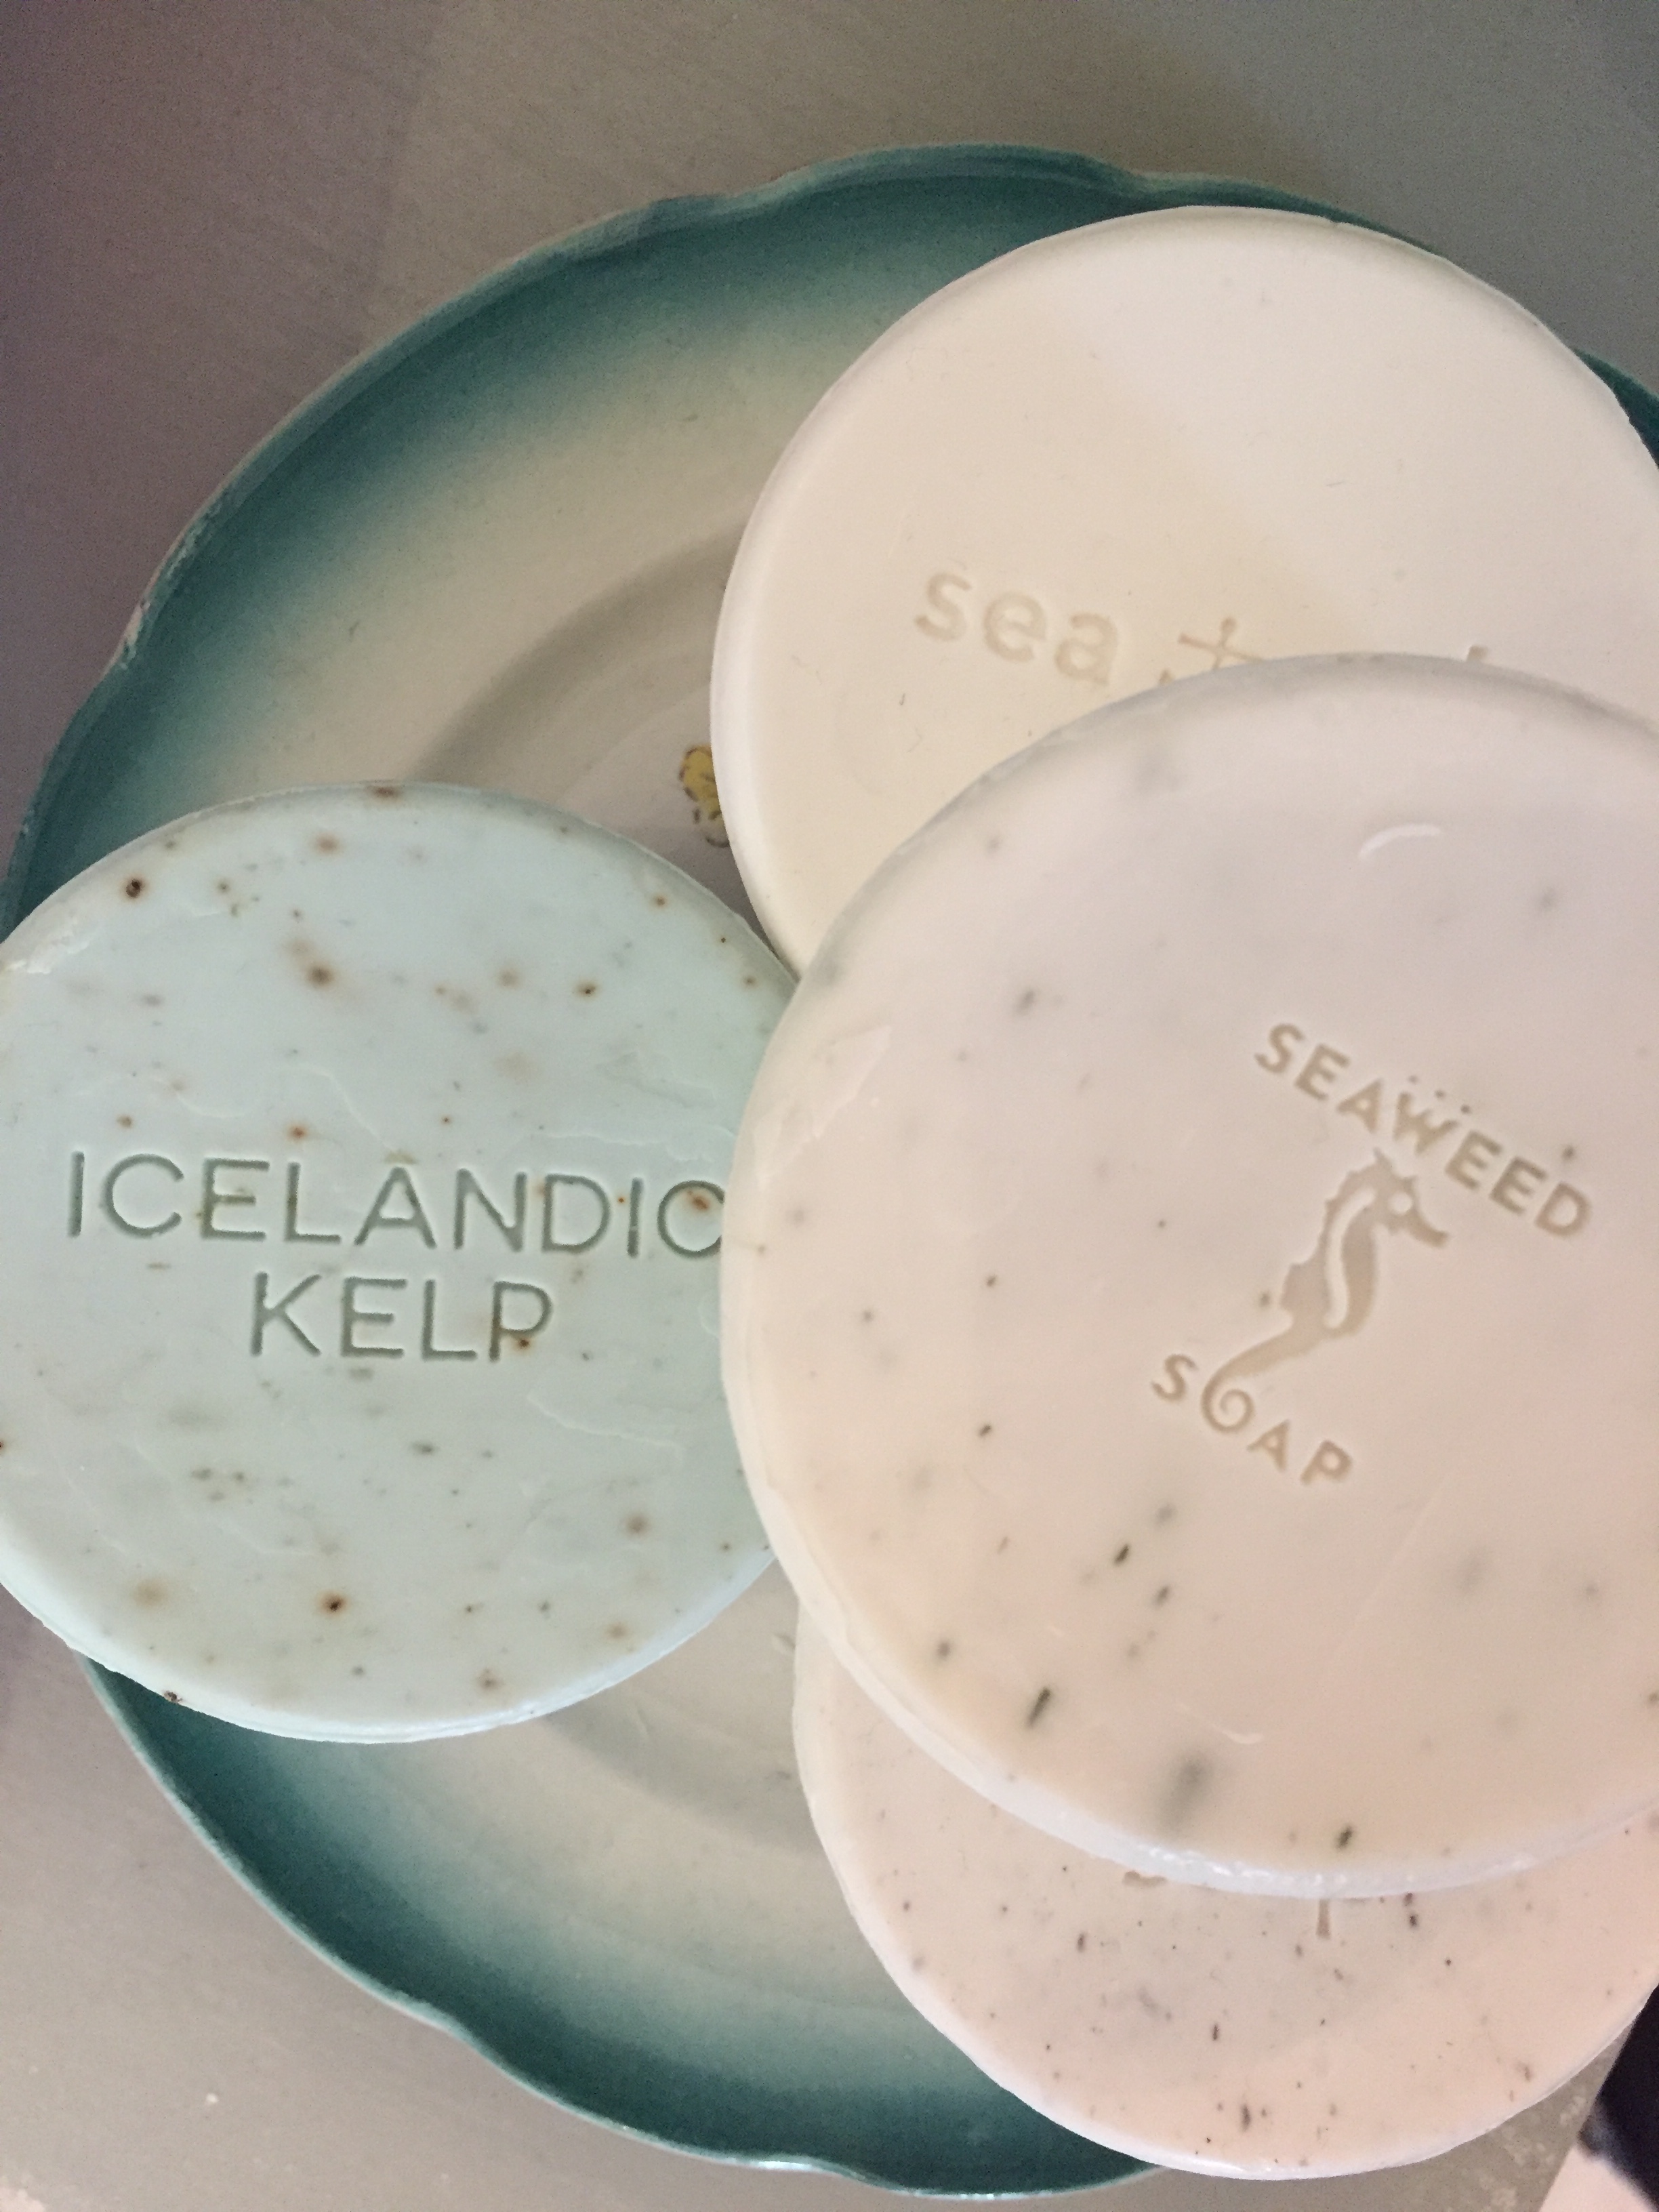 New soaps (Icelandic Kelp, and Seaweed)